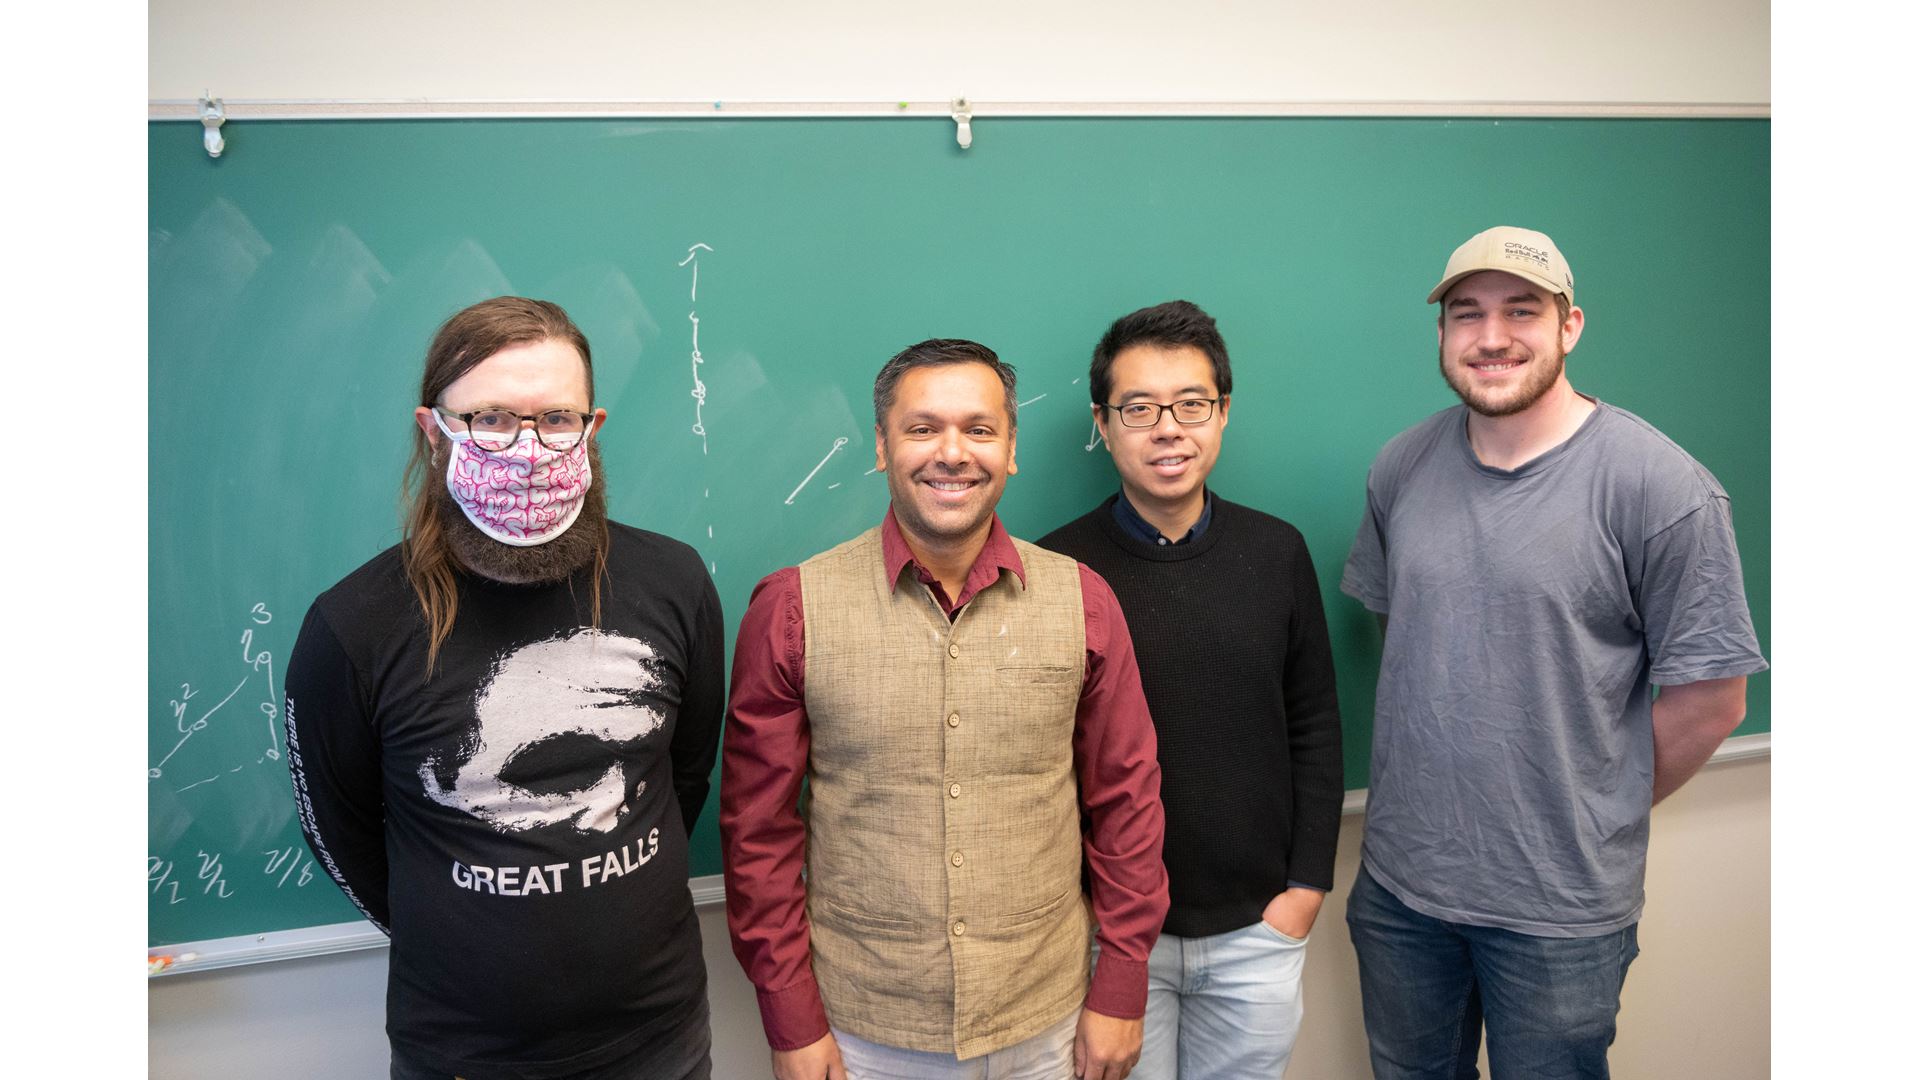 Four men in front of a chalkboard